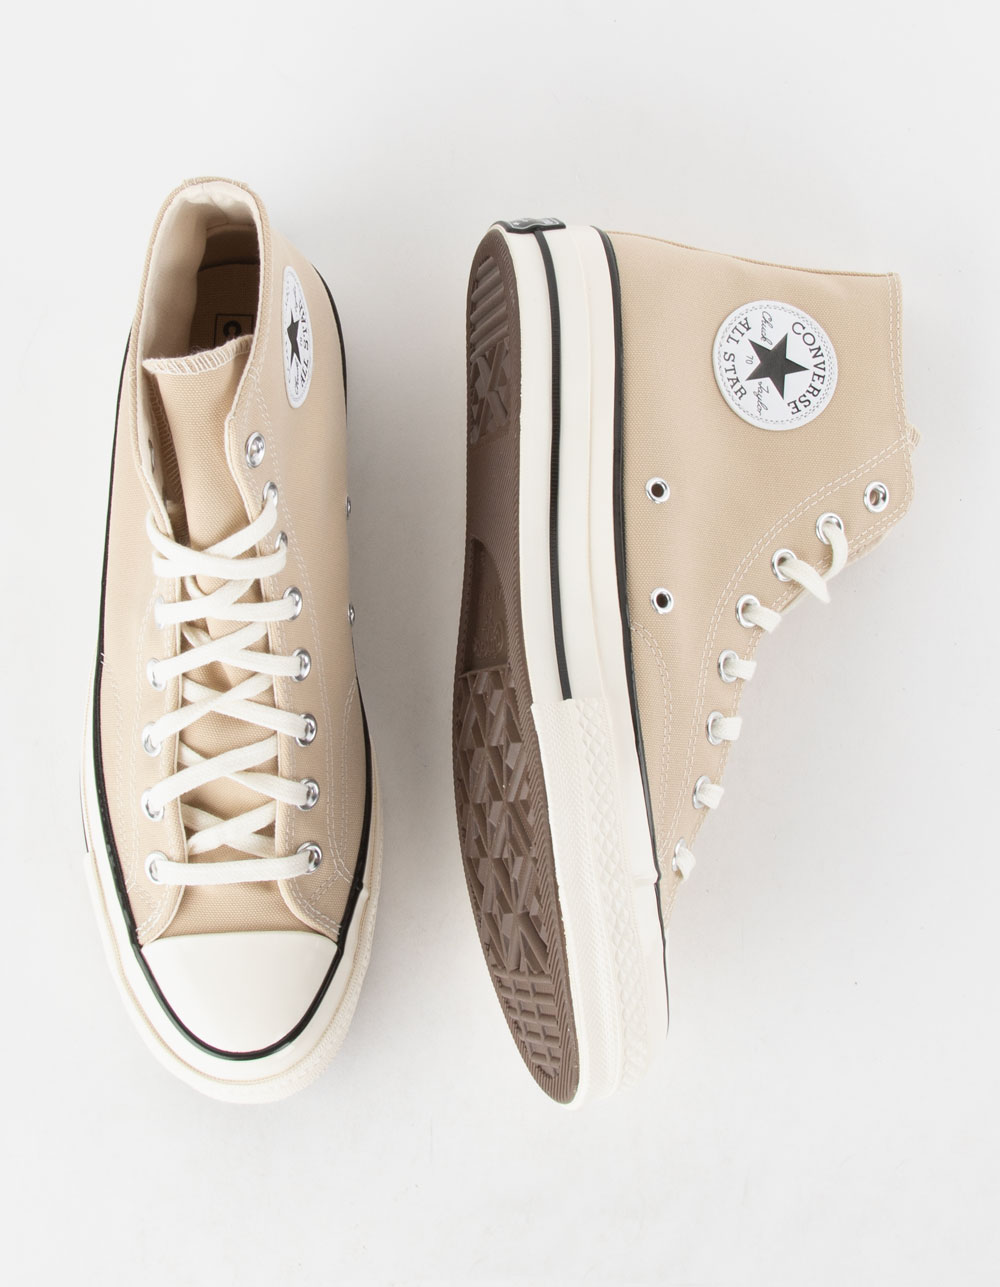 Converse Chuck Taylor All Star 70 High Top Shoes - Cream - M95w115